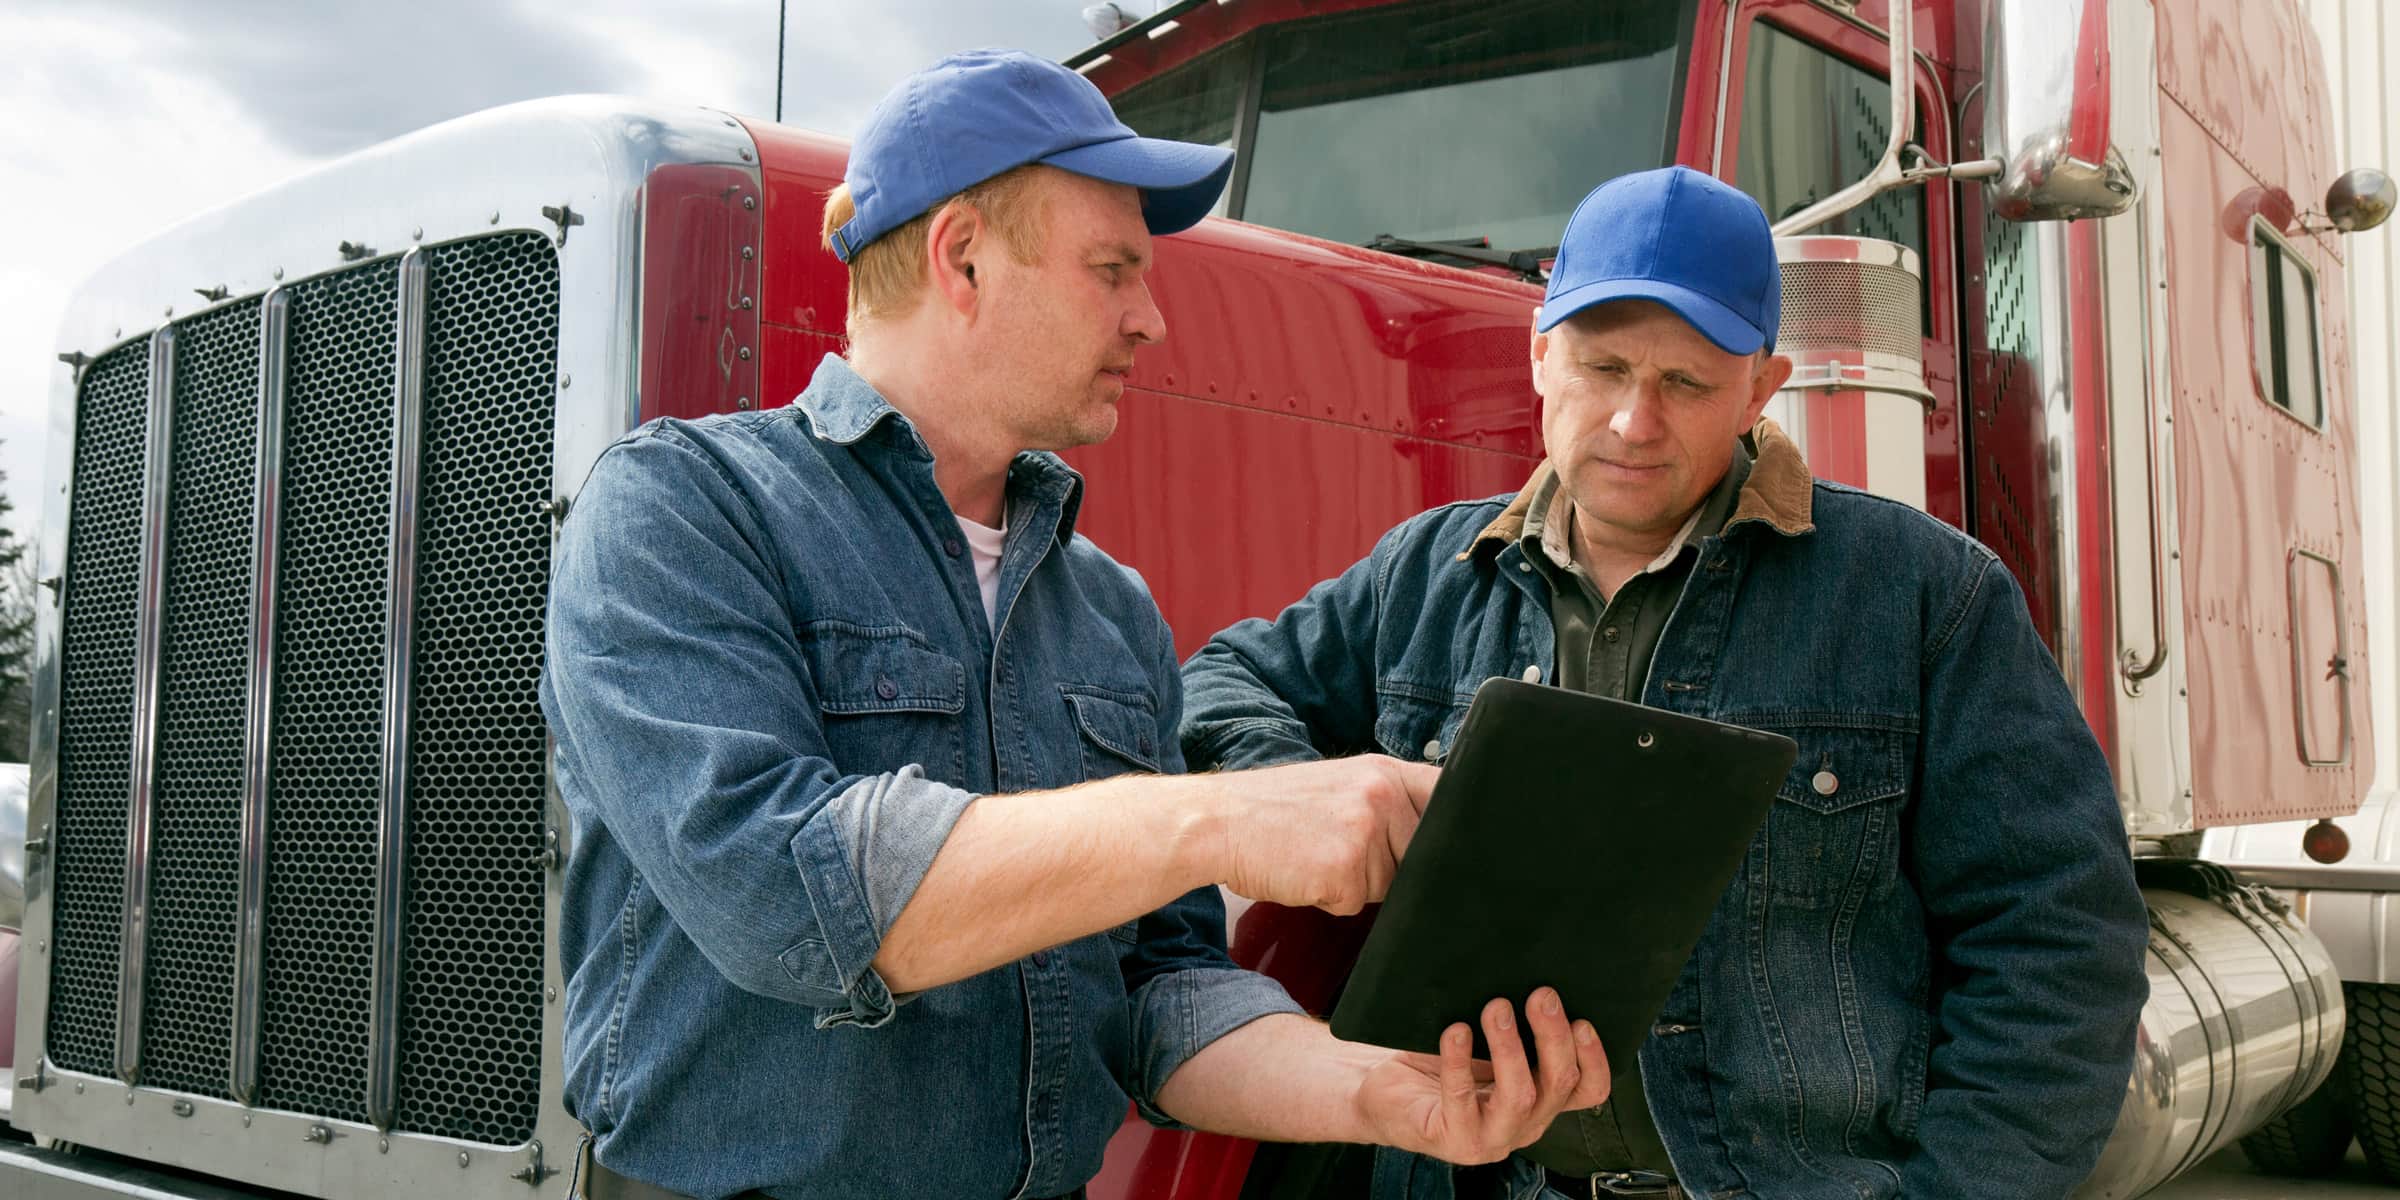 Truck drivers talking with iPad 